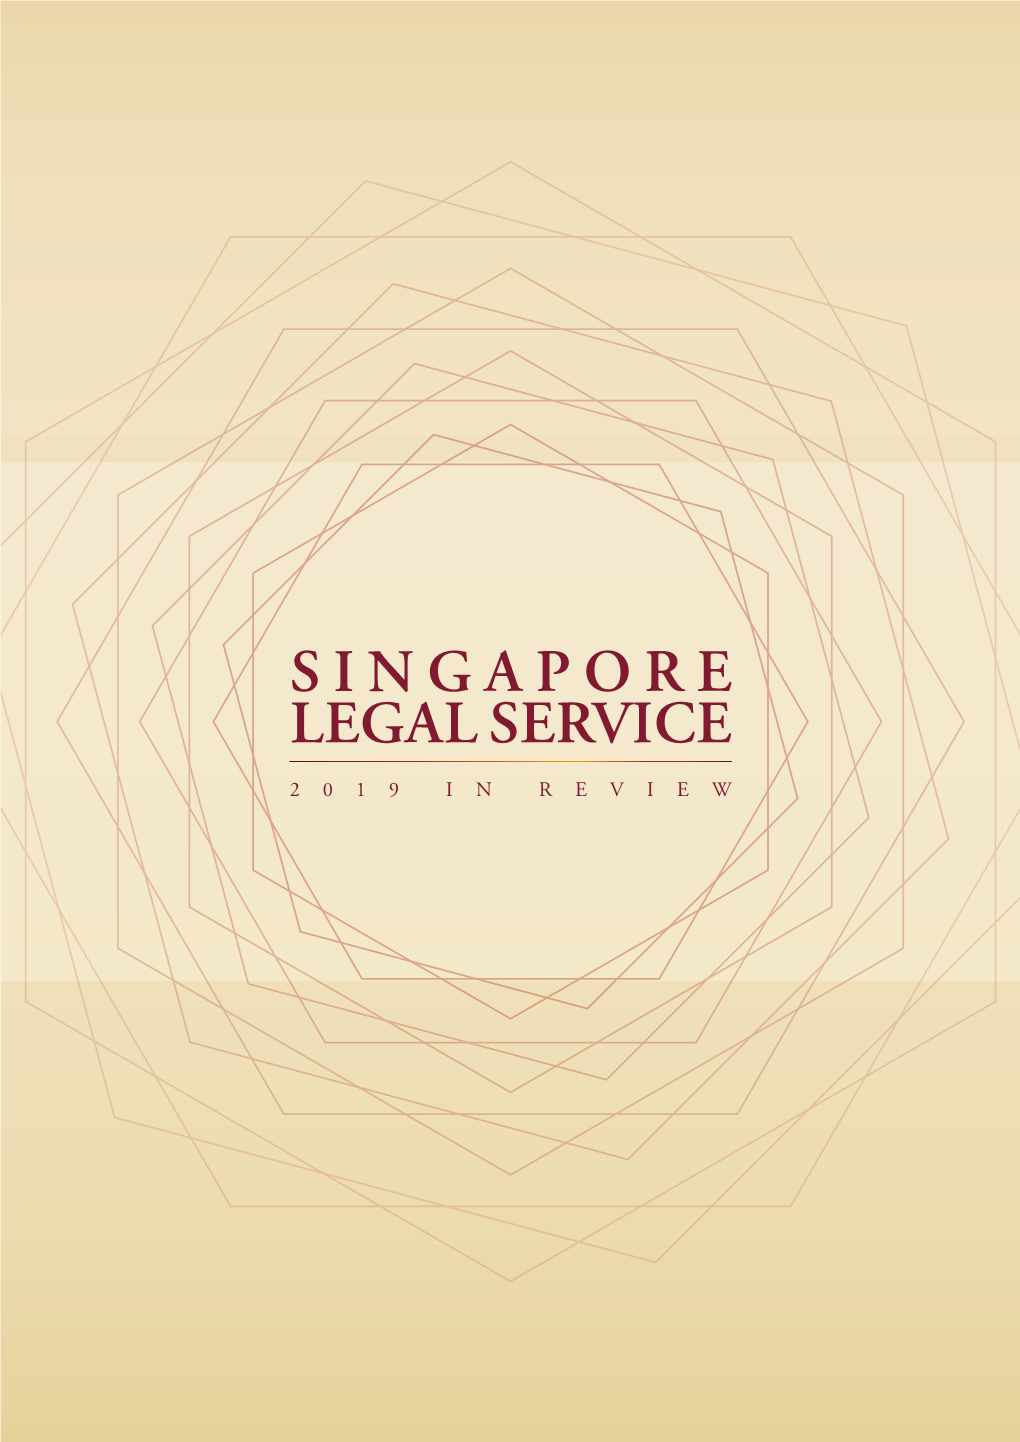 Singapore Legal Service